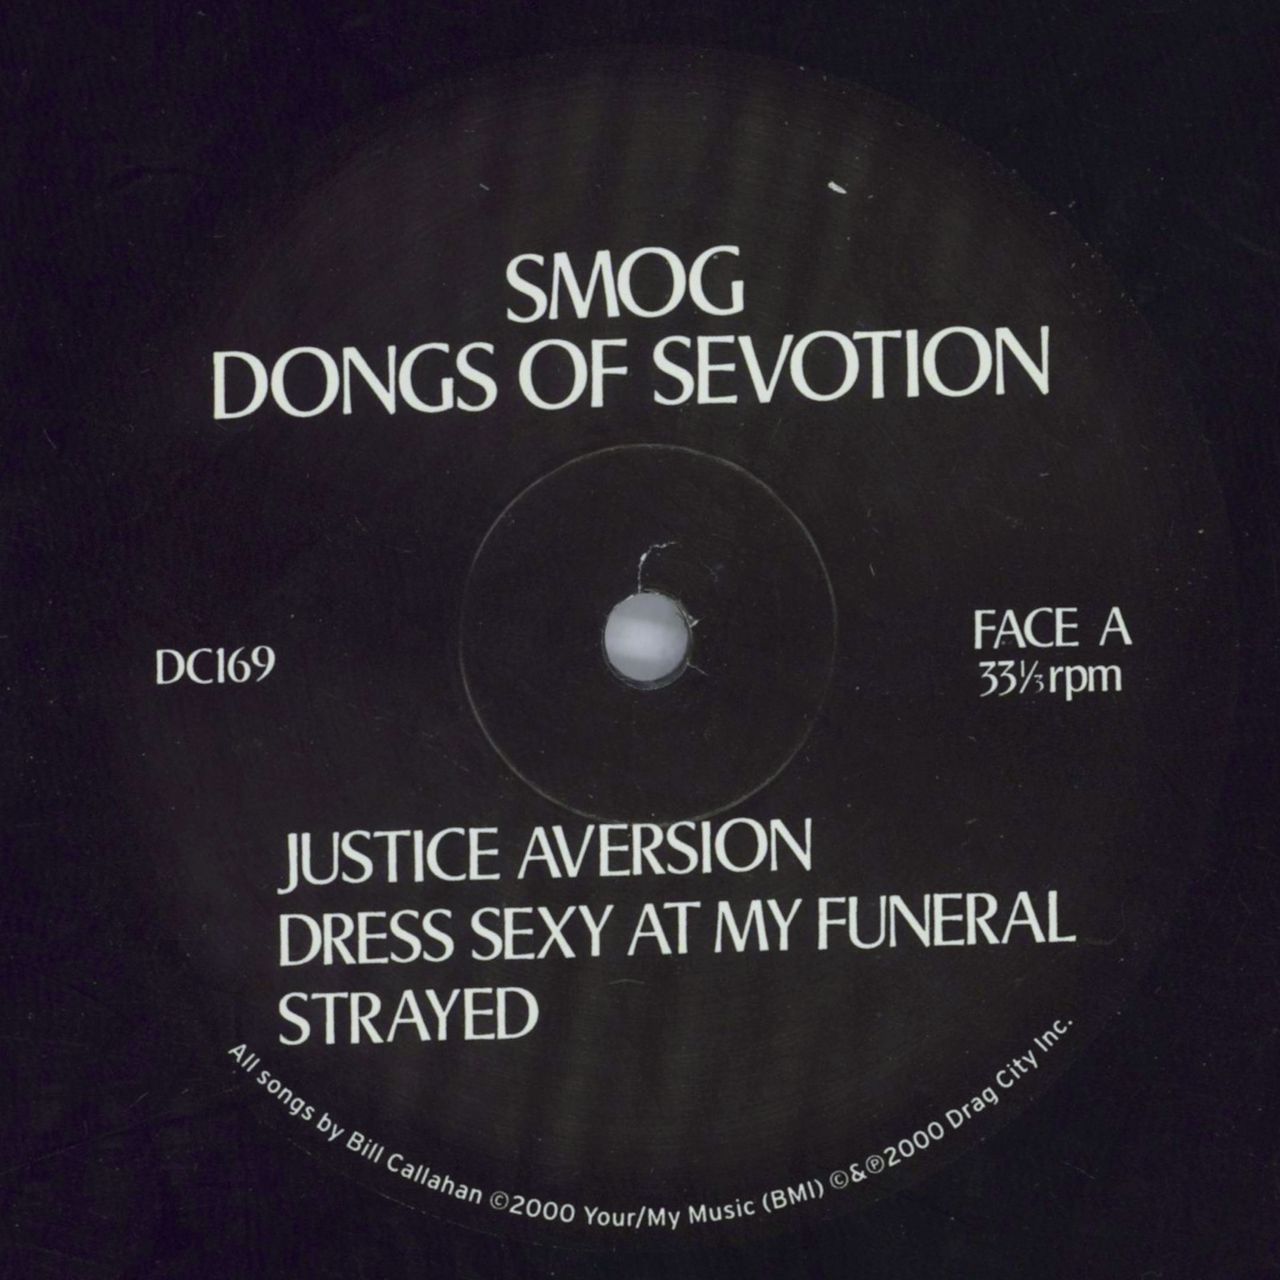 Smog Dongs Of Sevotion US 2-LP vinyl set